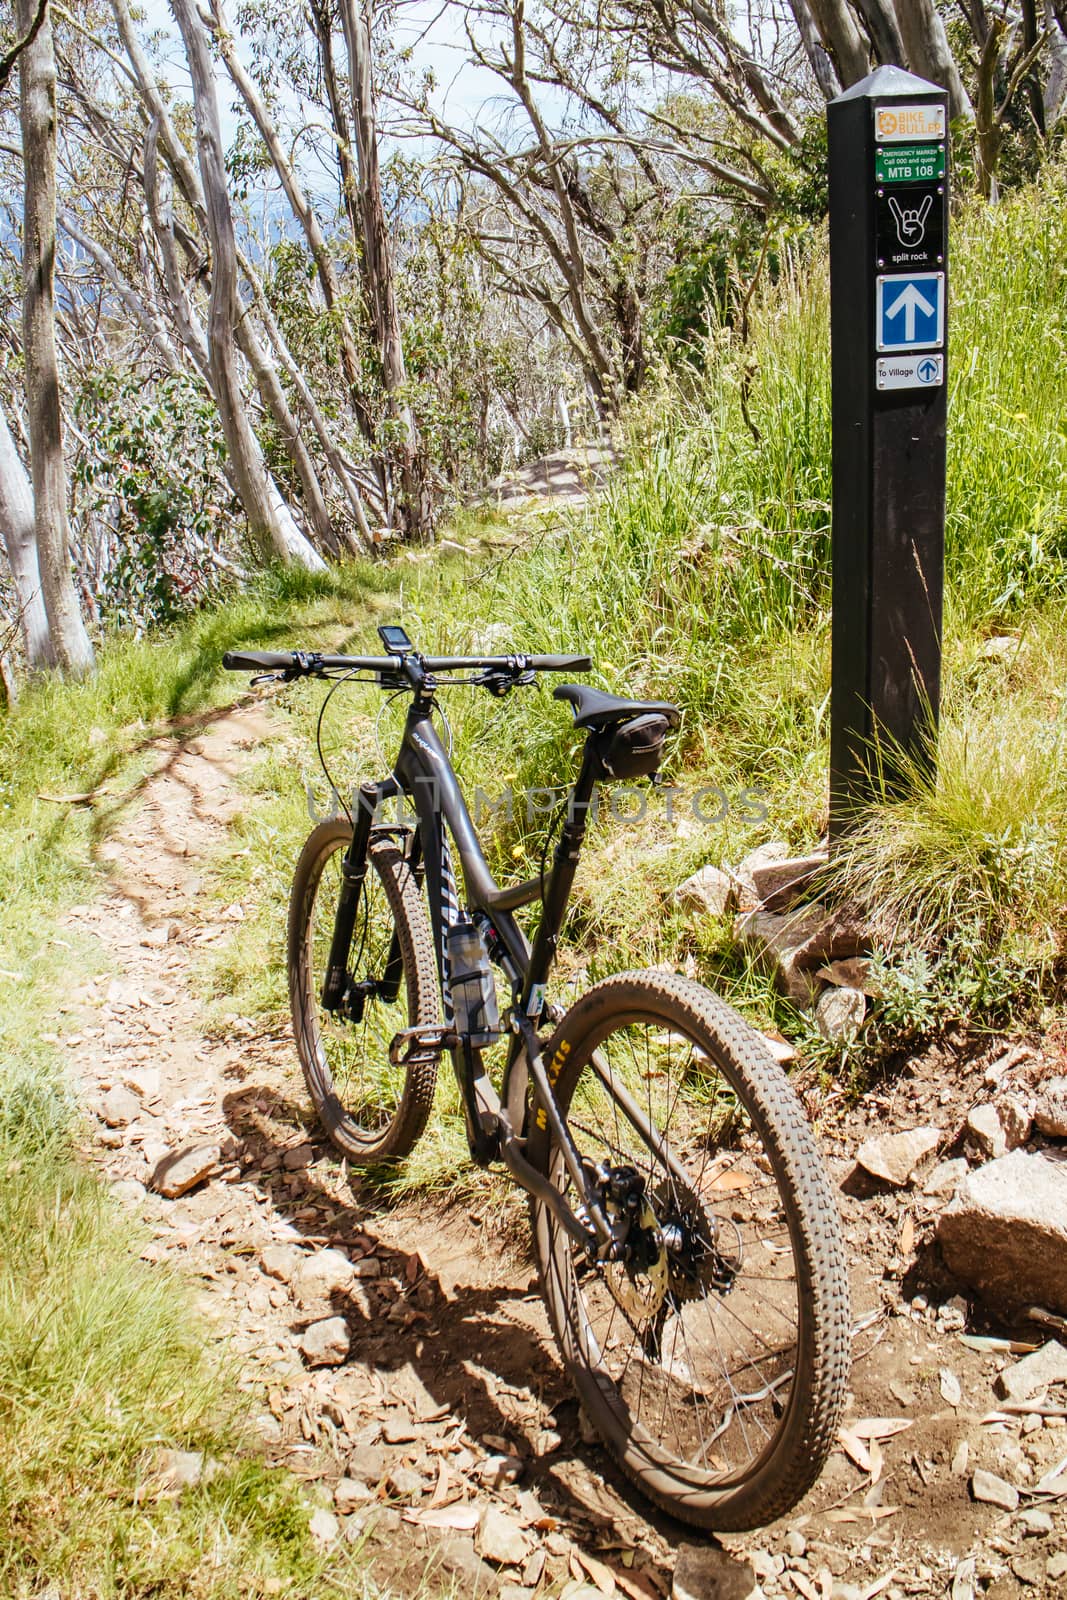 Mt Buller, Australia - December 31, 2015: Cross country mountain bike trails on a hot summer's day